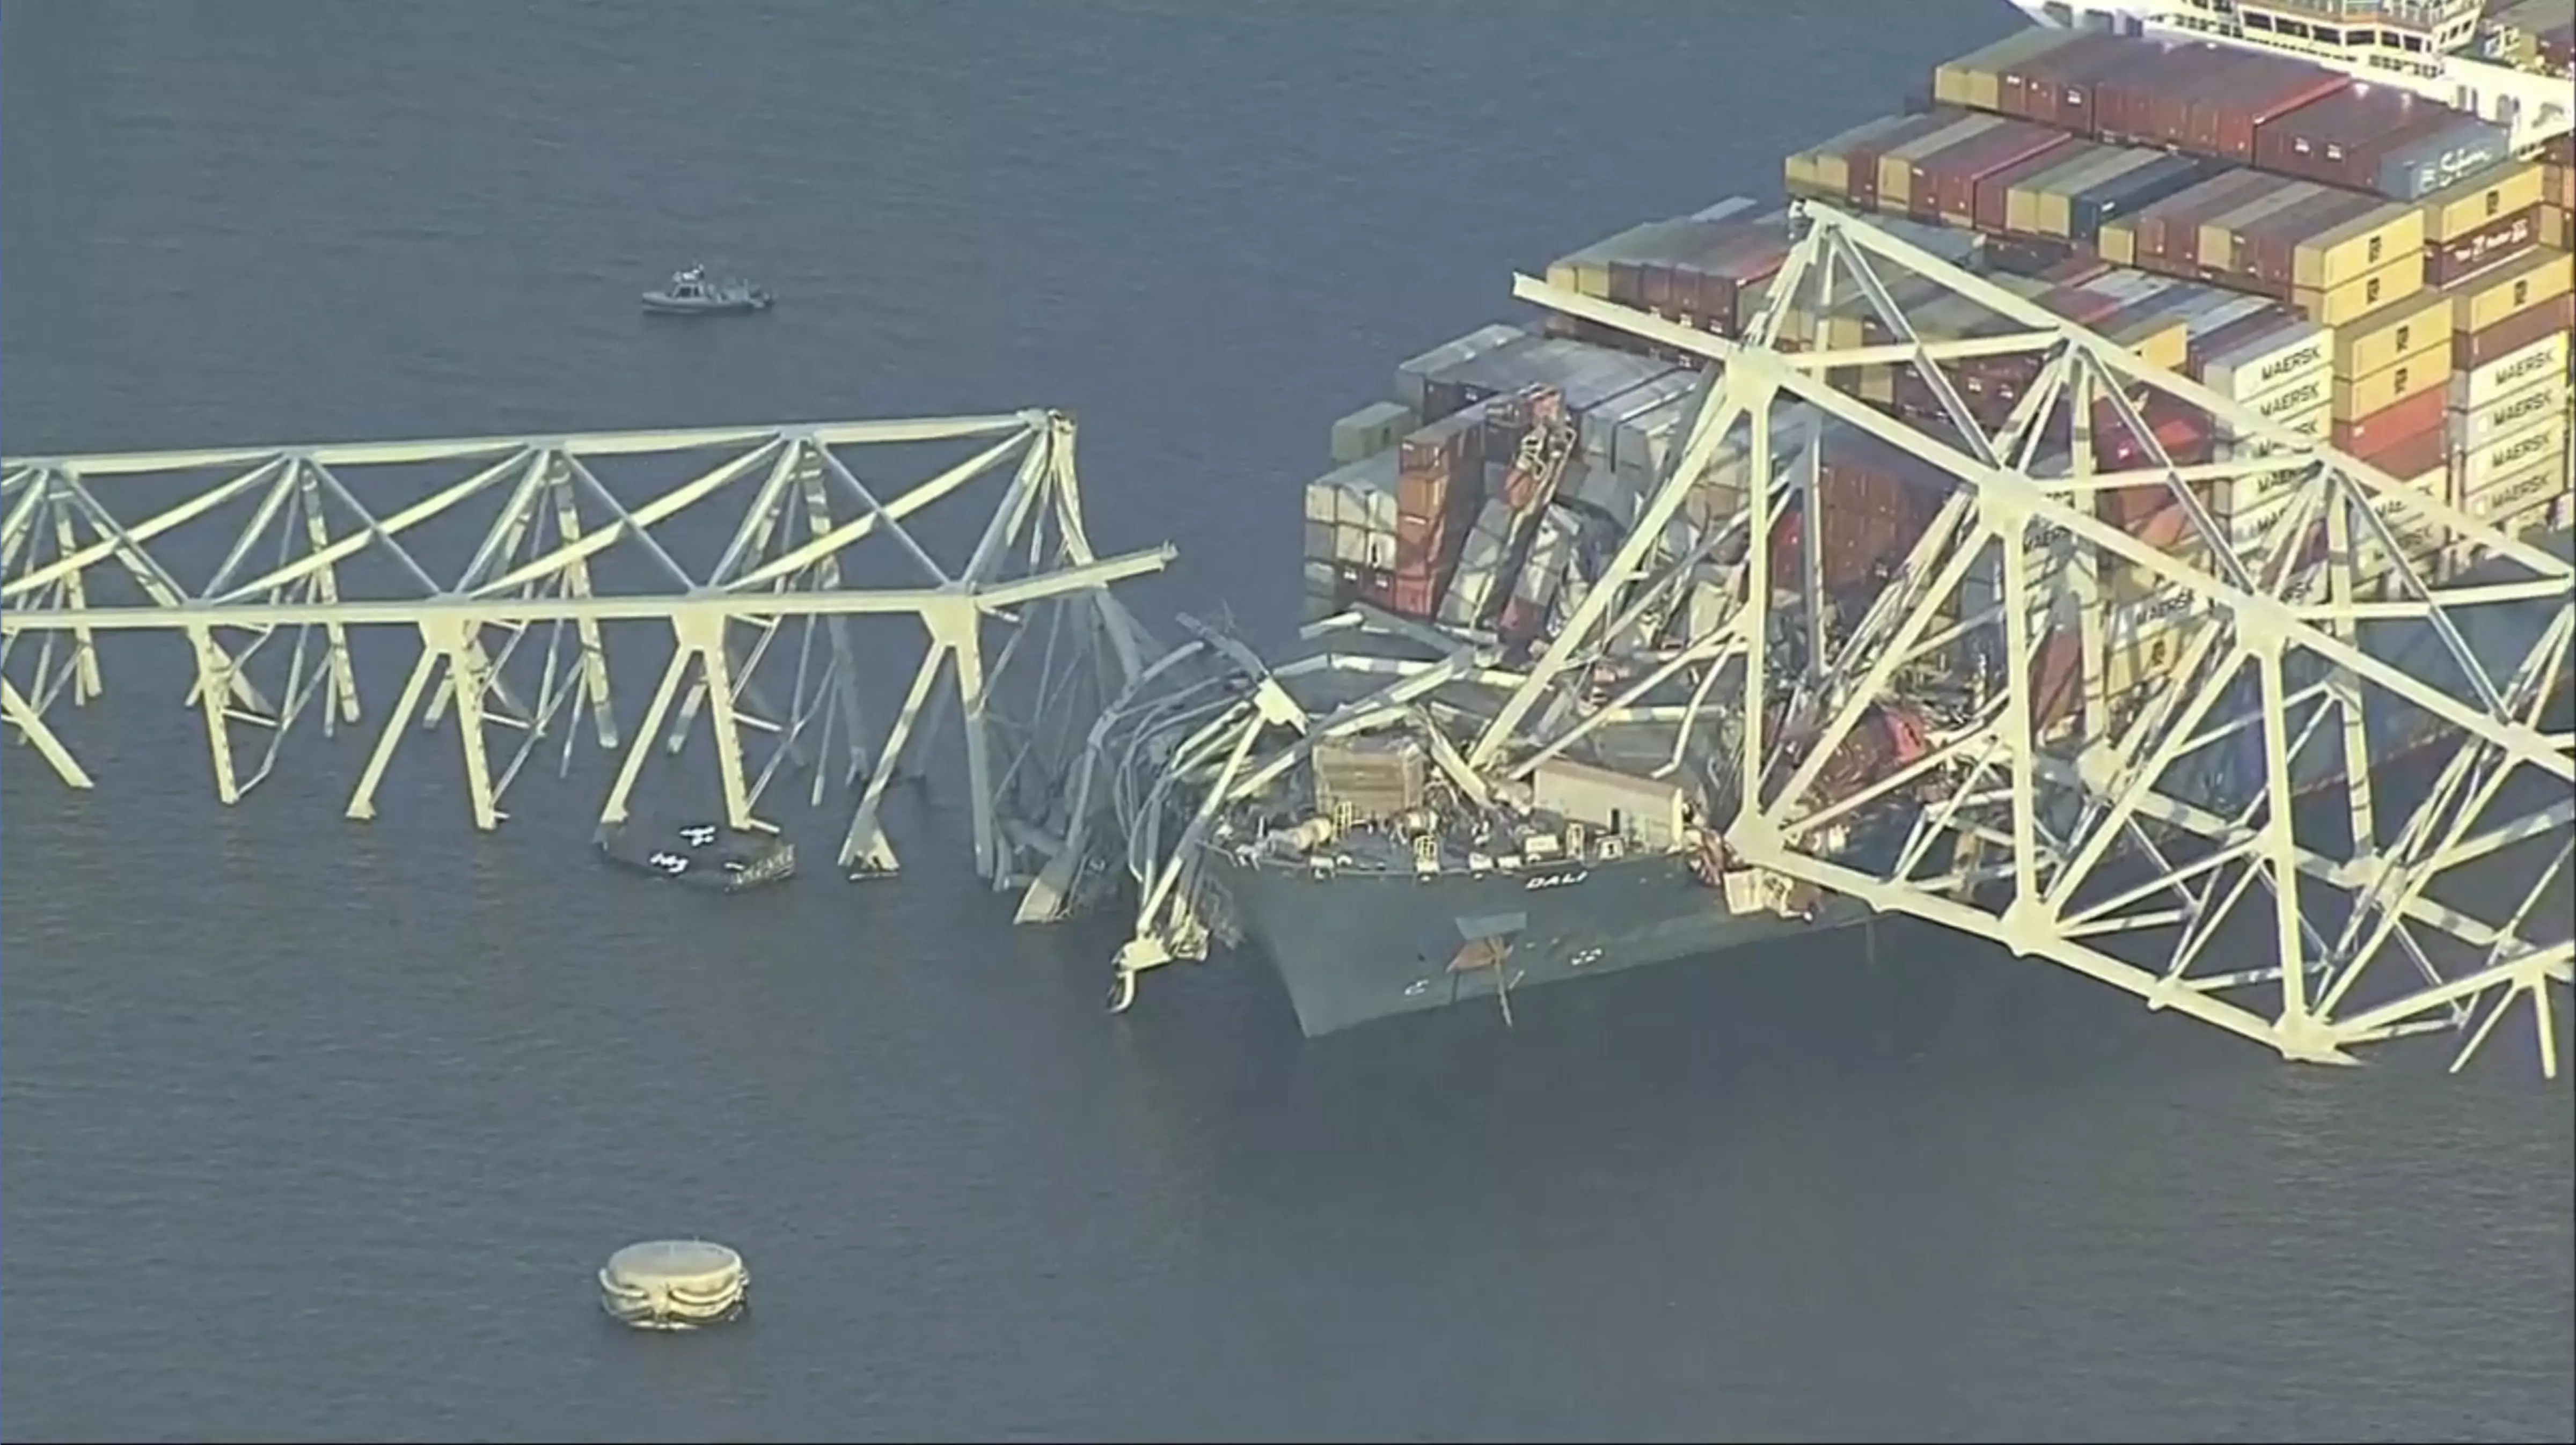 Between ship’s alarm and Baltimore bridge fall, cops got 90 secs to stop traffic